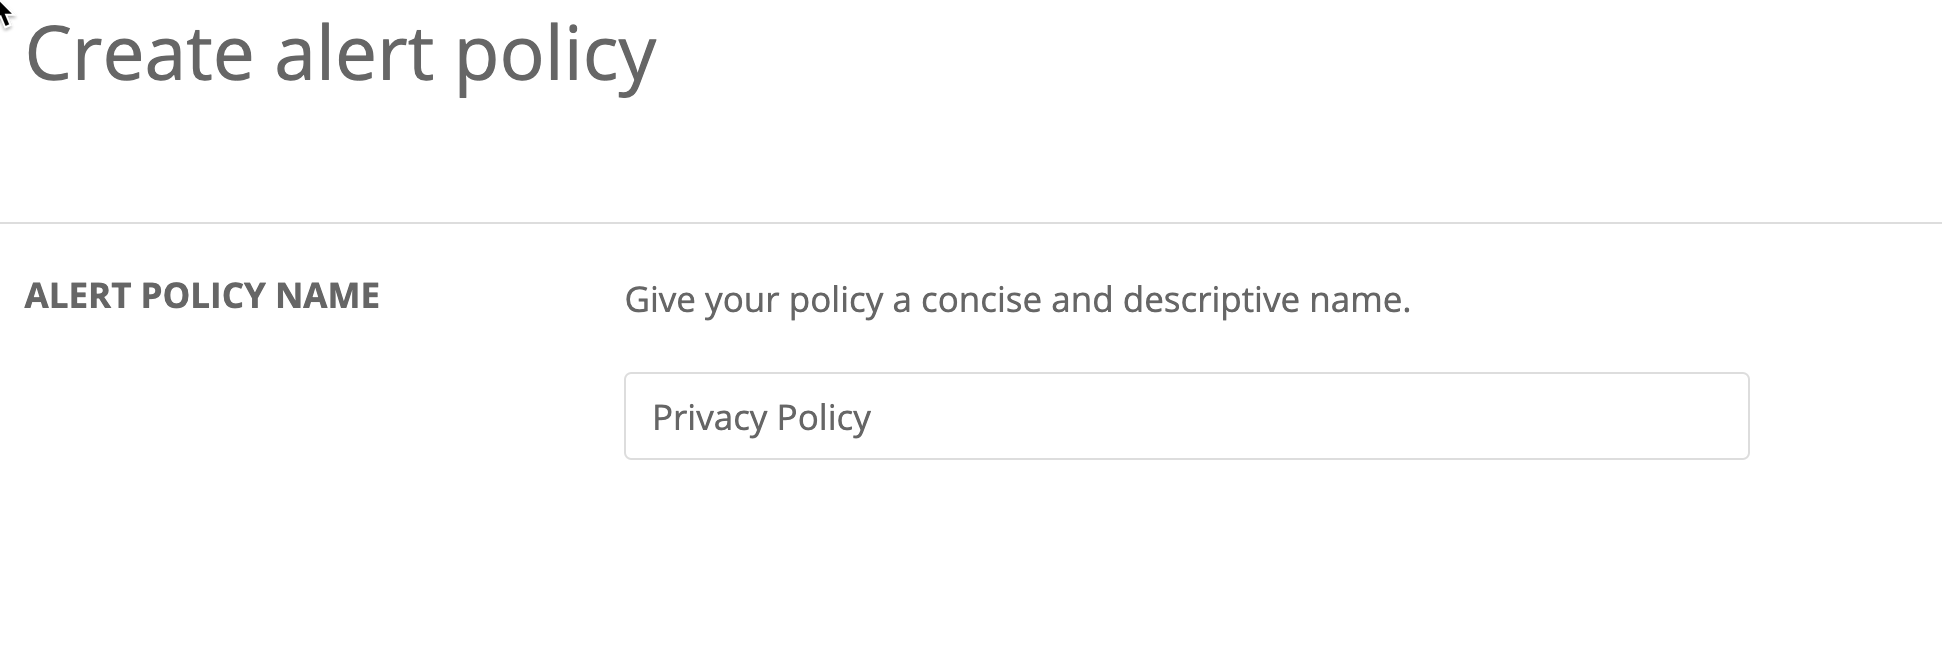 "create alert policy" example screenshot